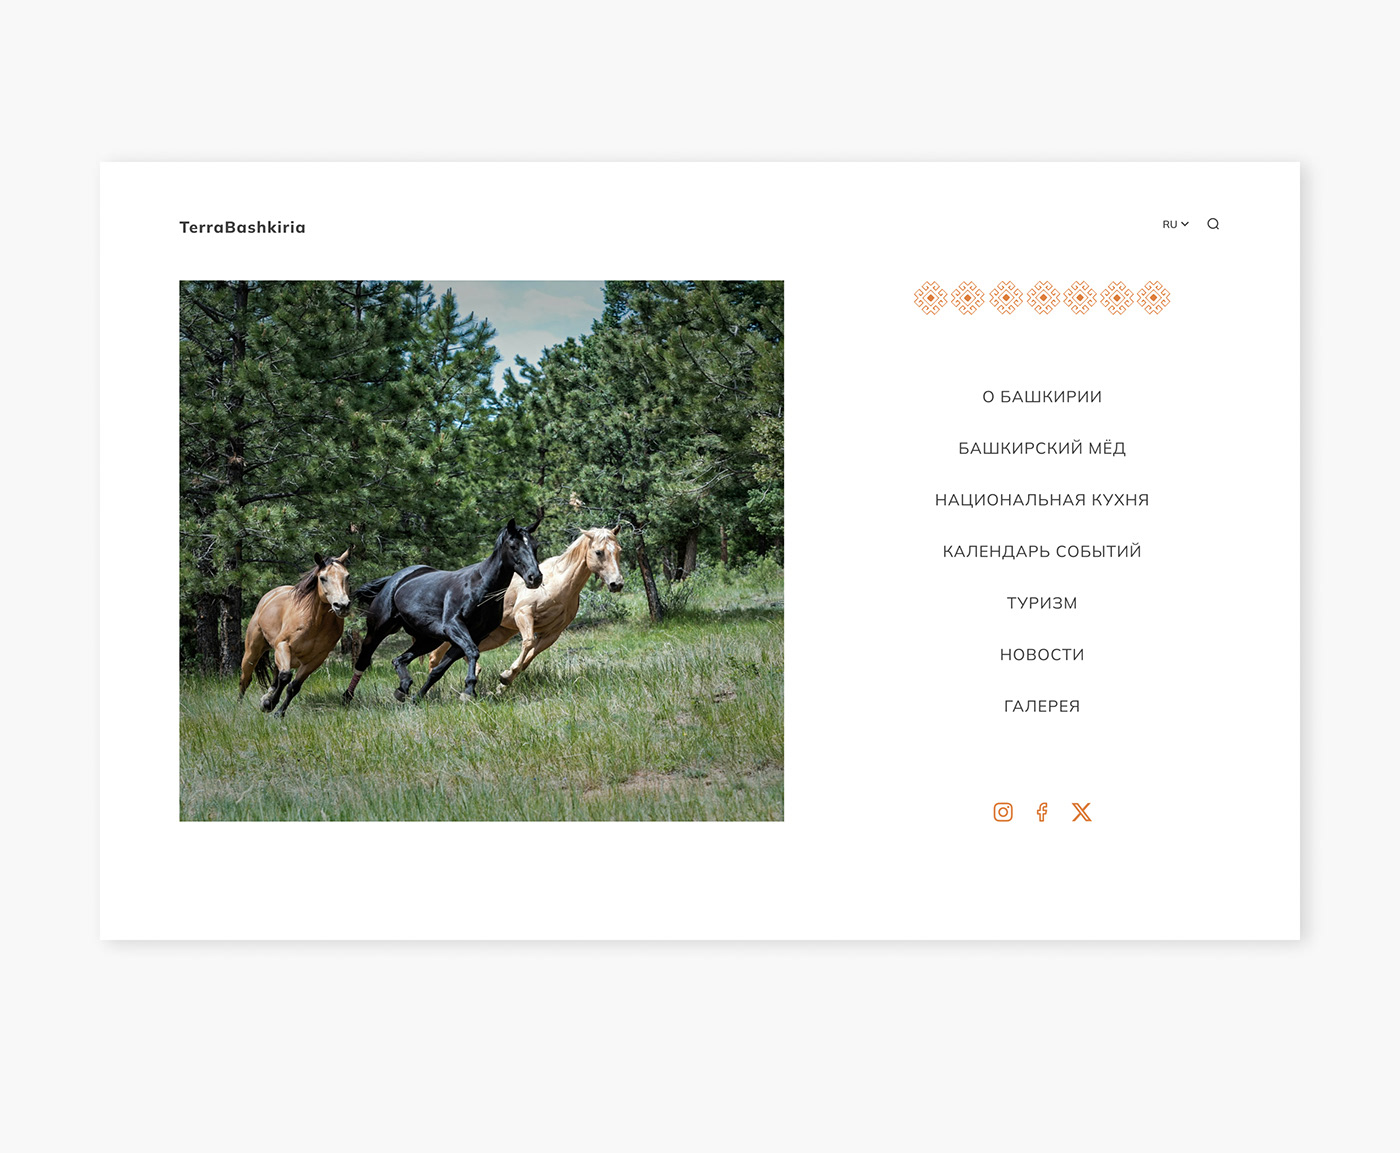 UI/UX Nature Travel design Russia tourism Bashkortostan Minimalism journey horses